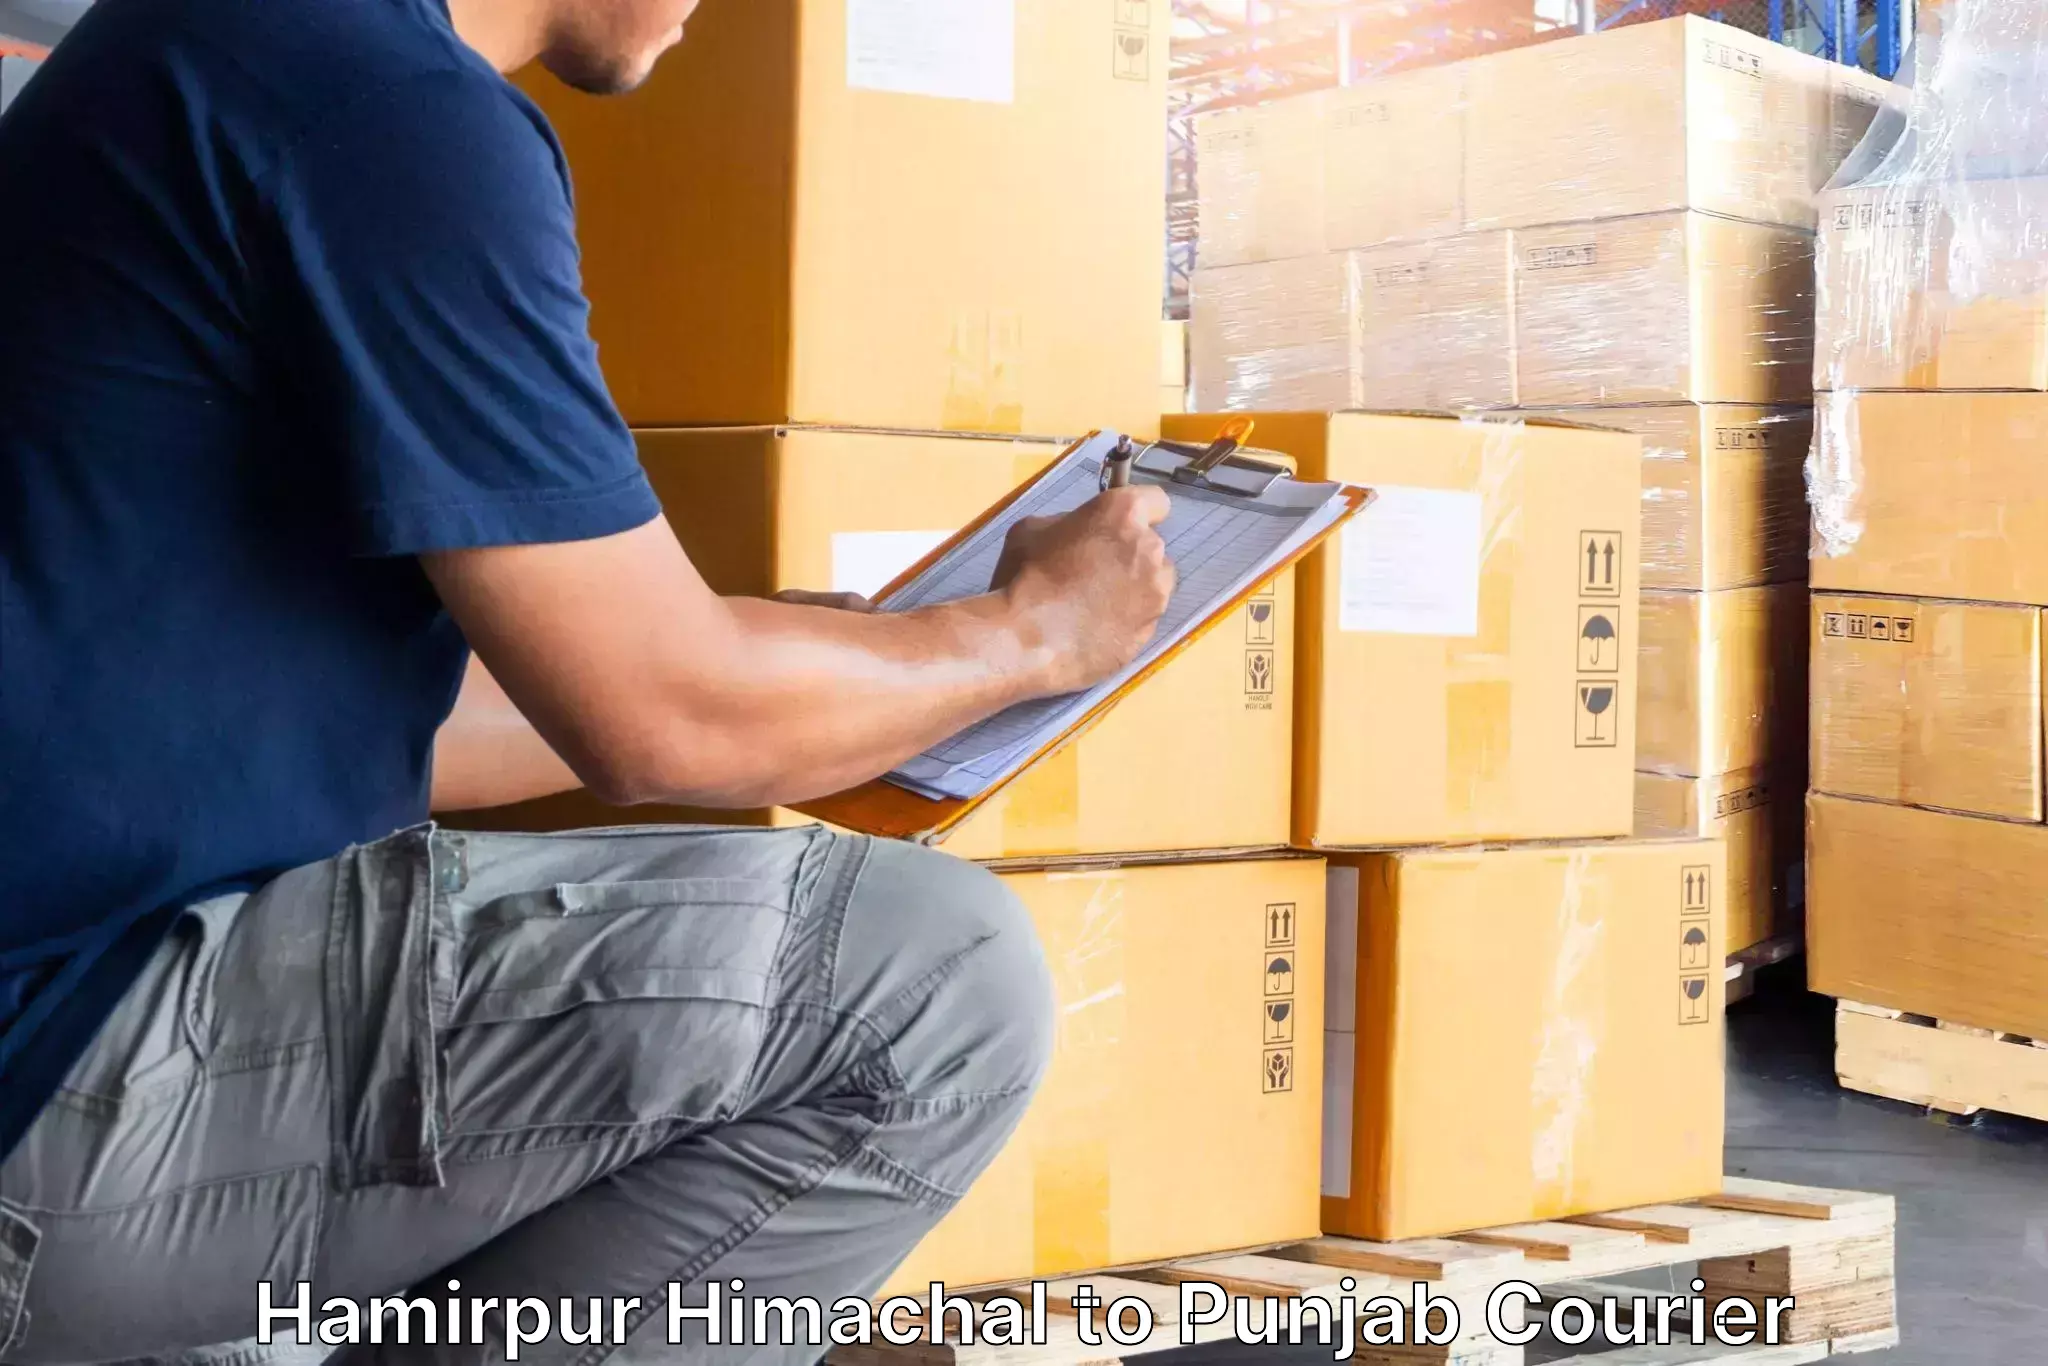 Quality moving company Hamirpur Himachal to Bathinda